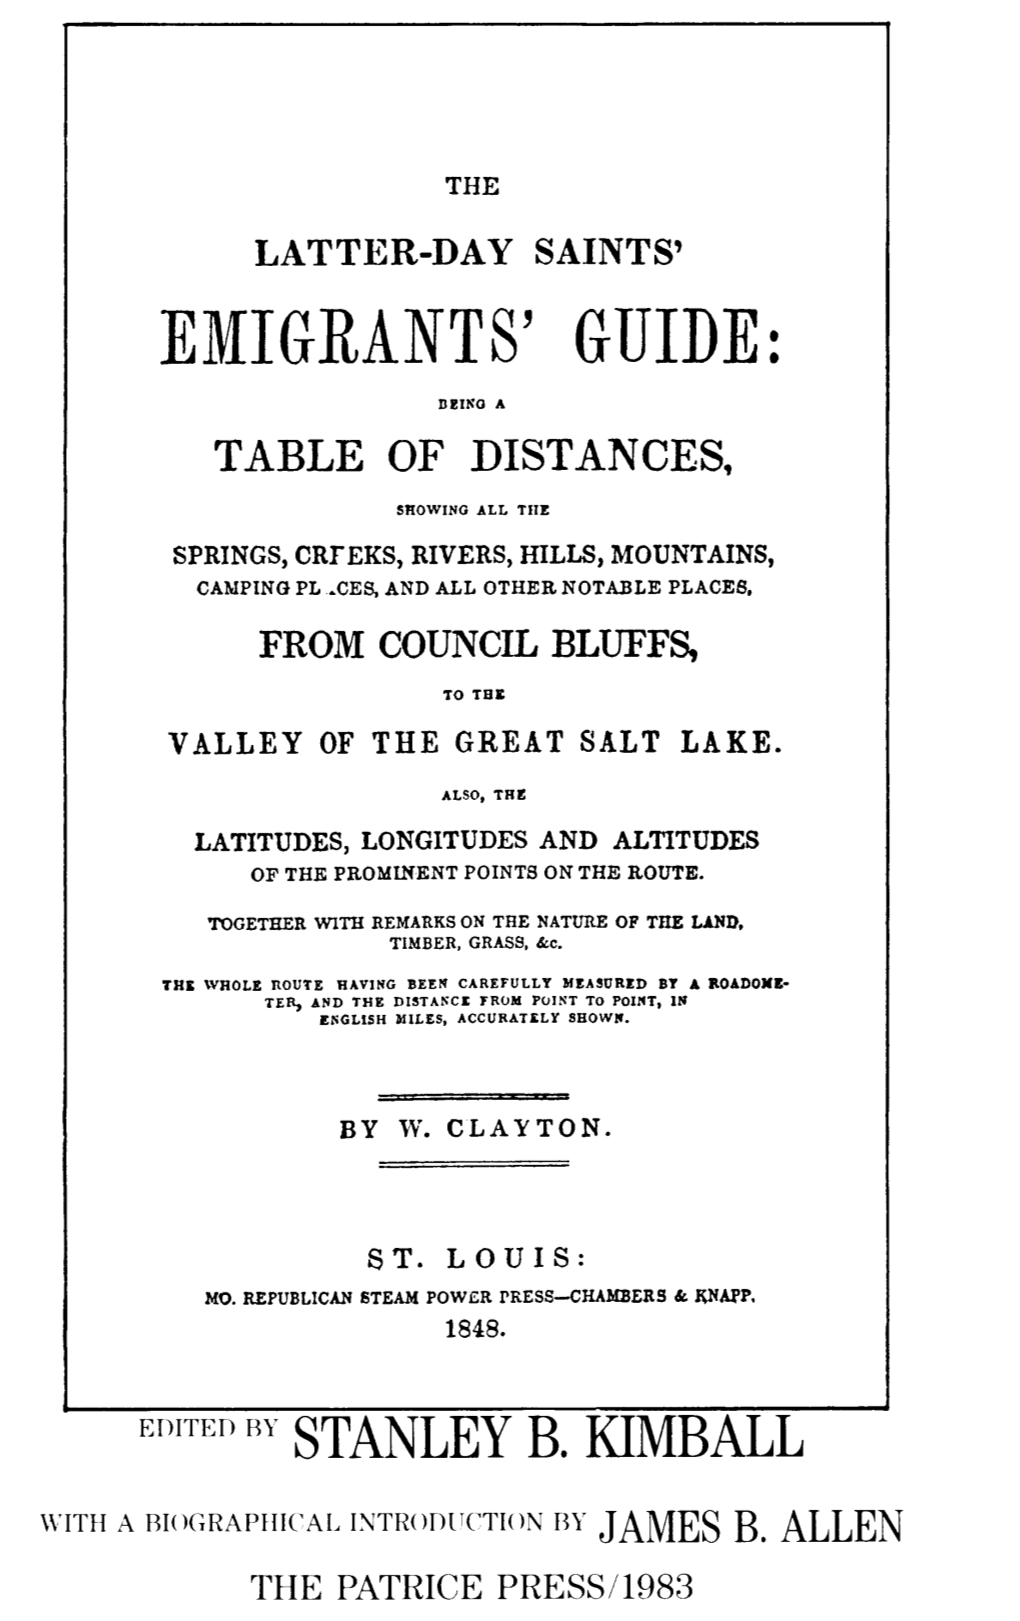 Emigrants' Guide